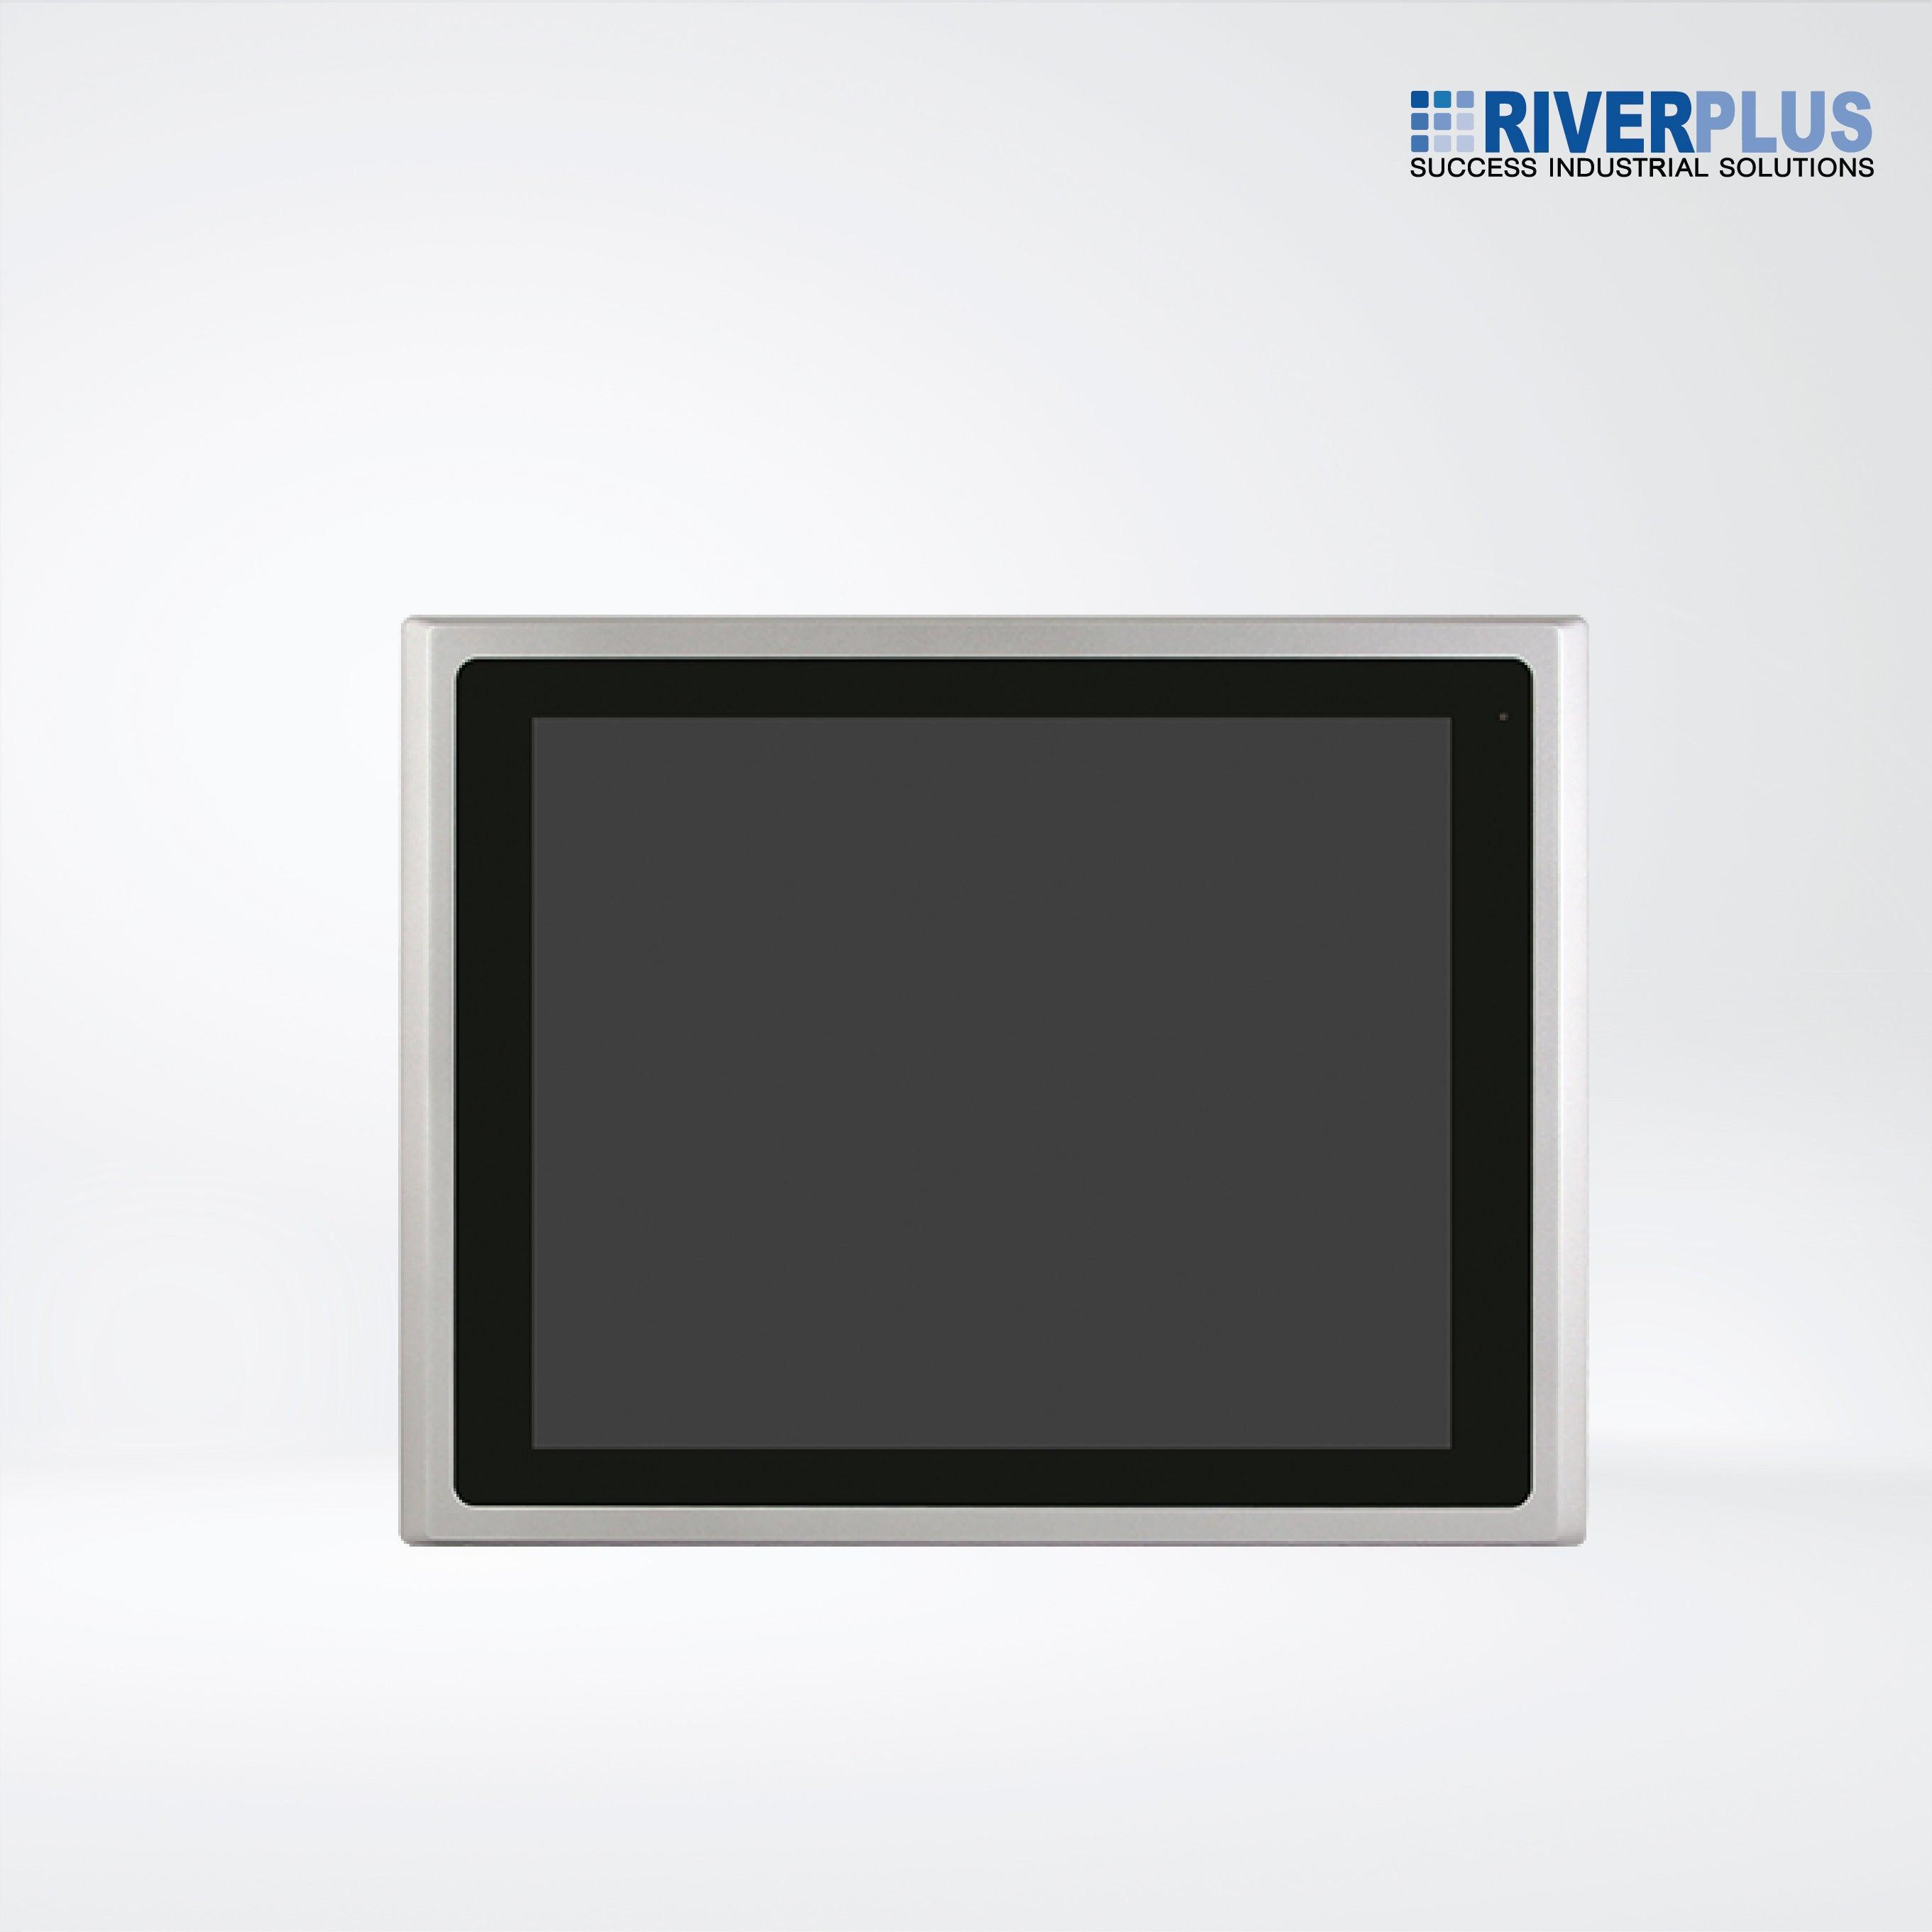 ViPAC-817GH 17” Intel Celeron N2930 Fanless Expandable Panel PC - Riverplus